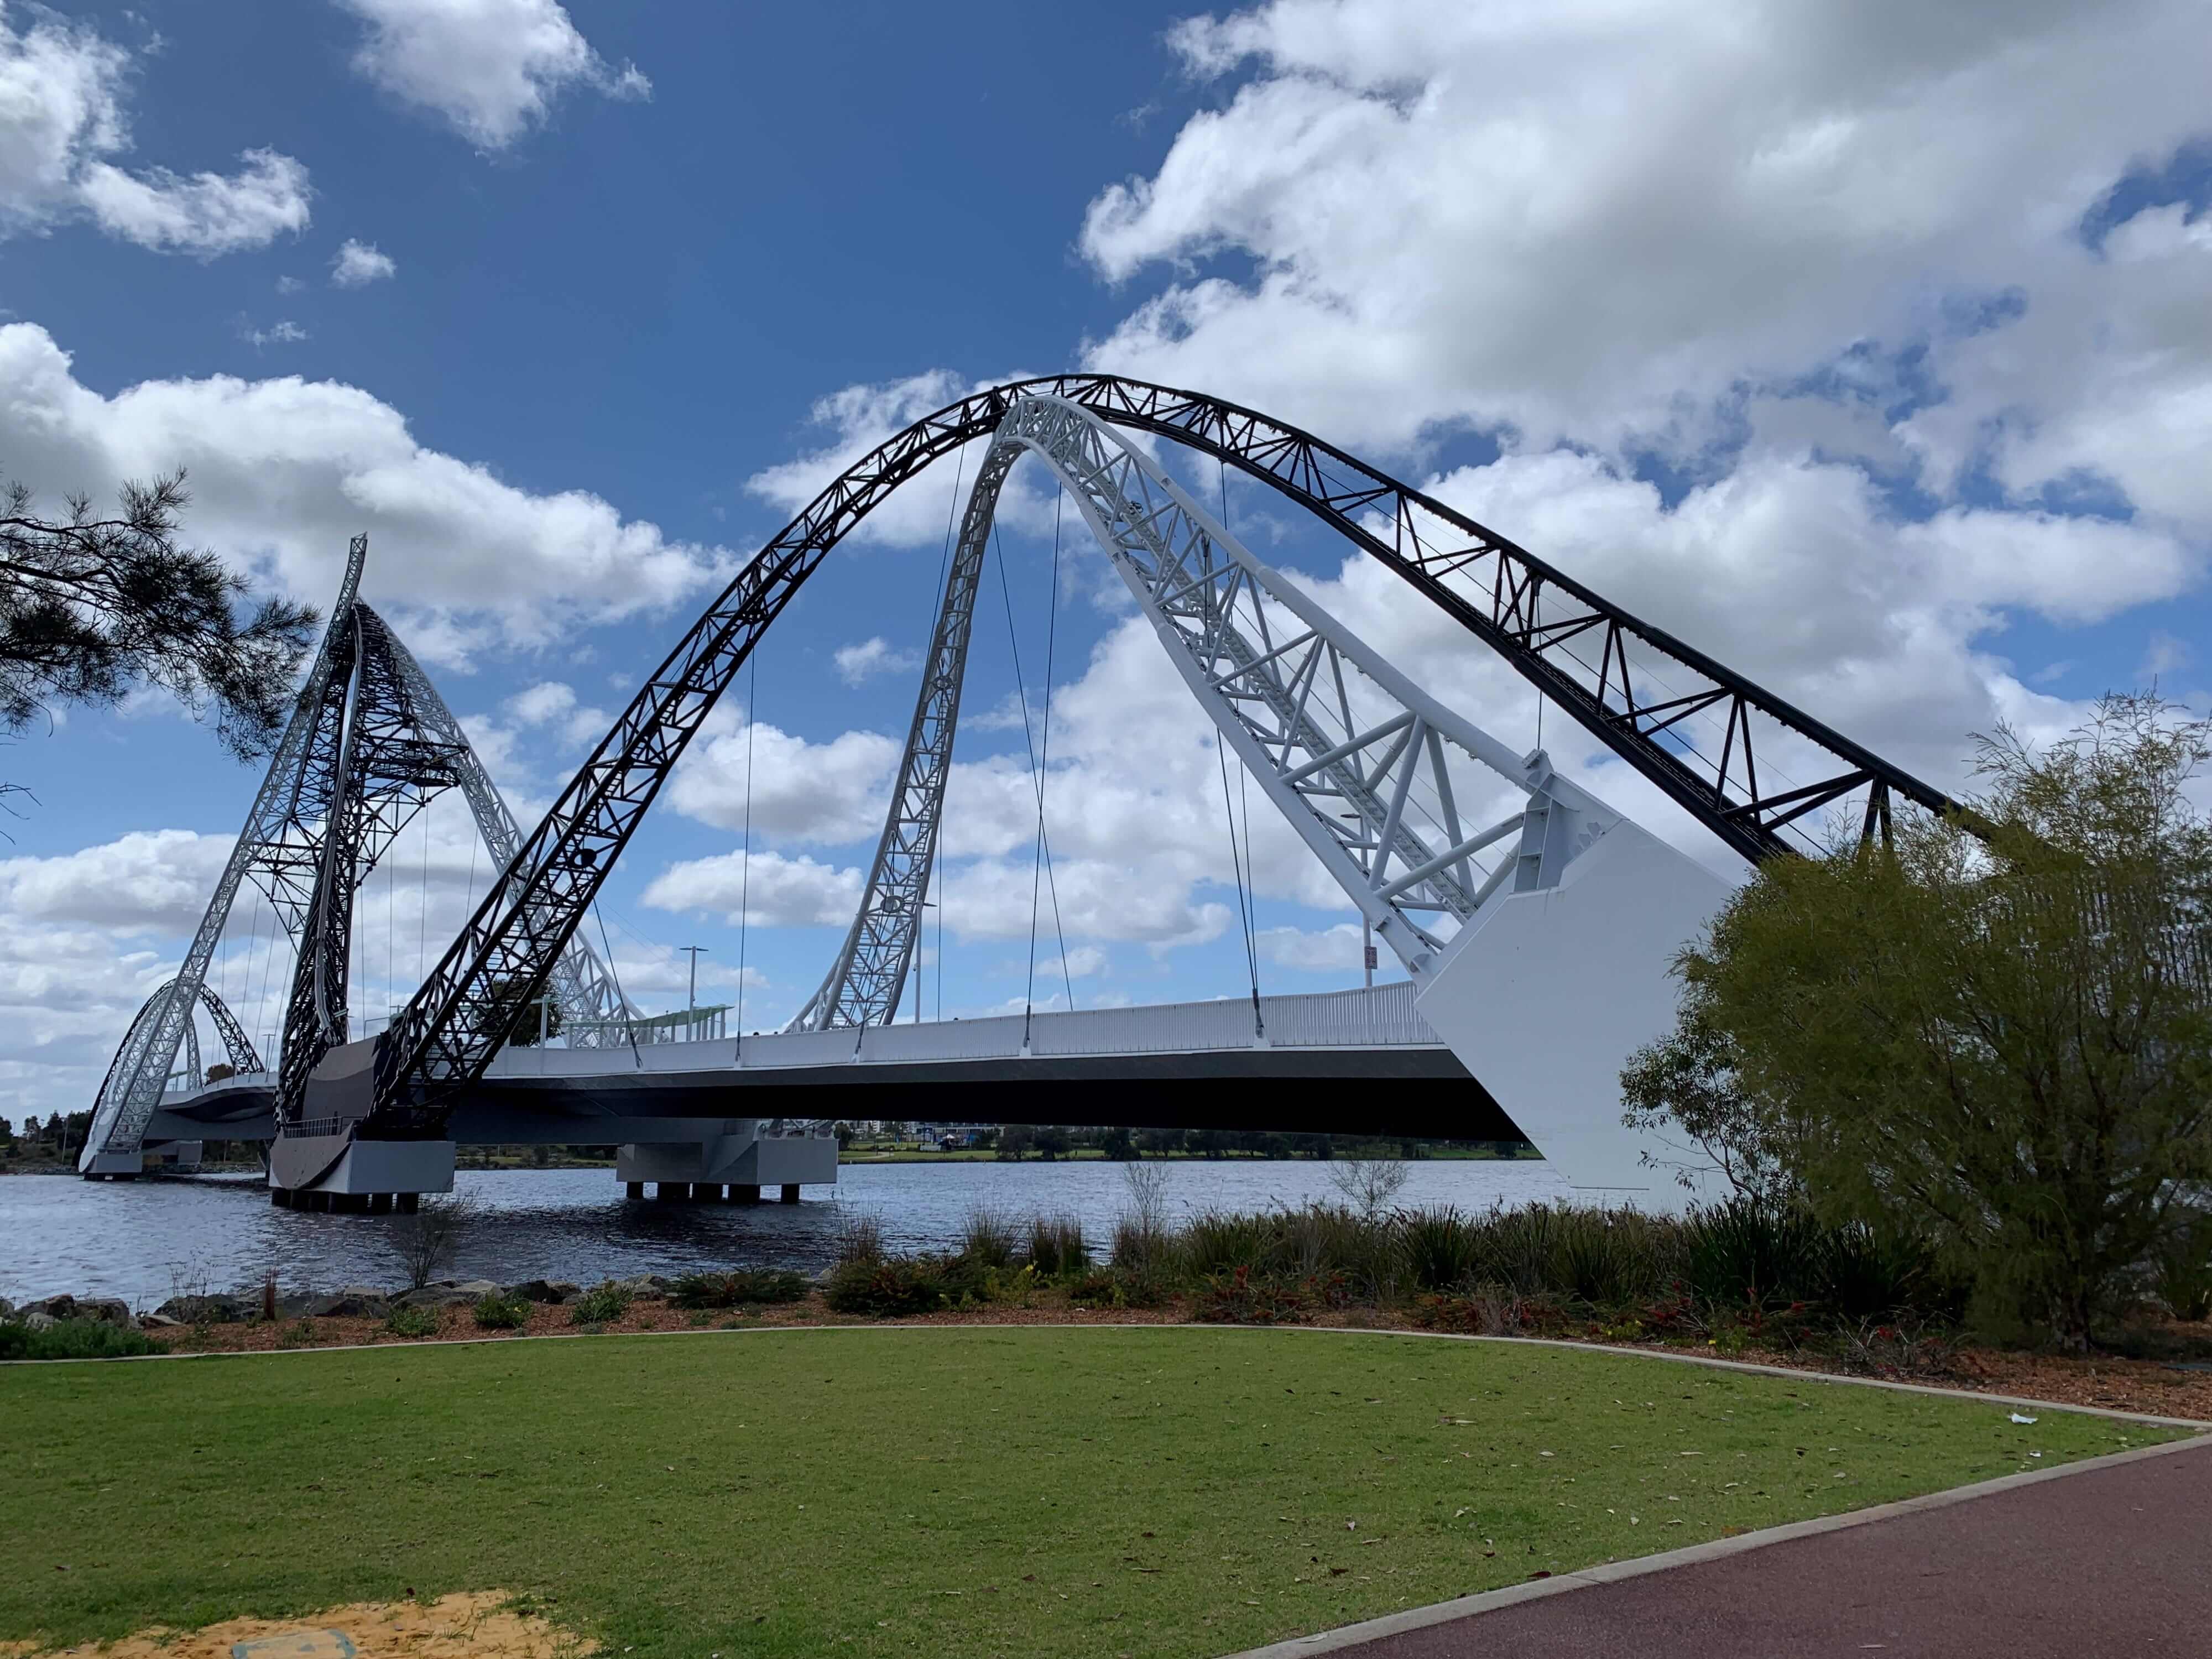 photo of the Matagarup Bridge in Perth, WA